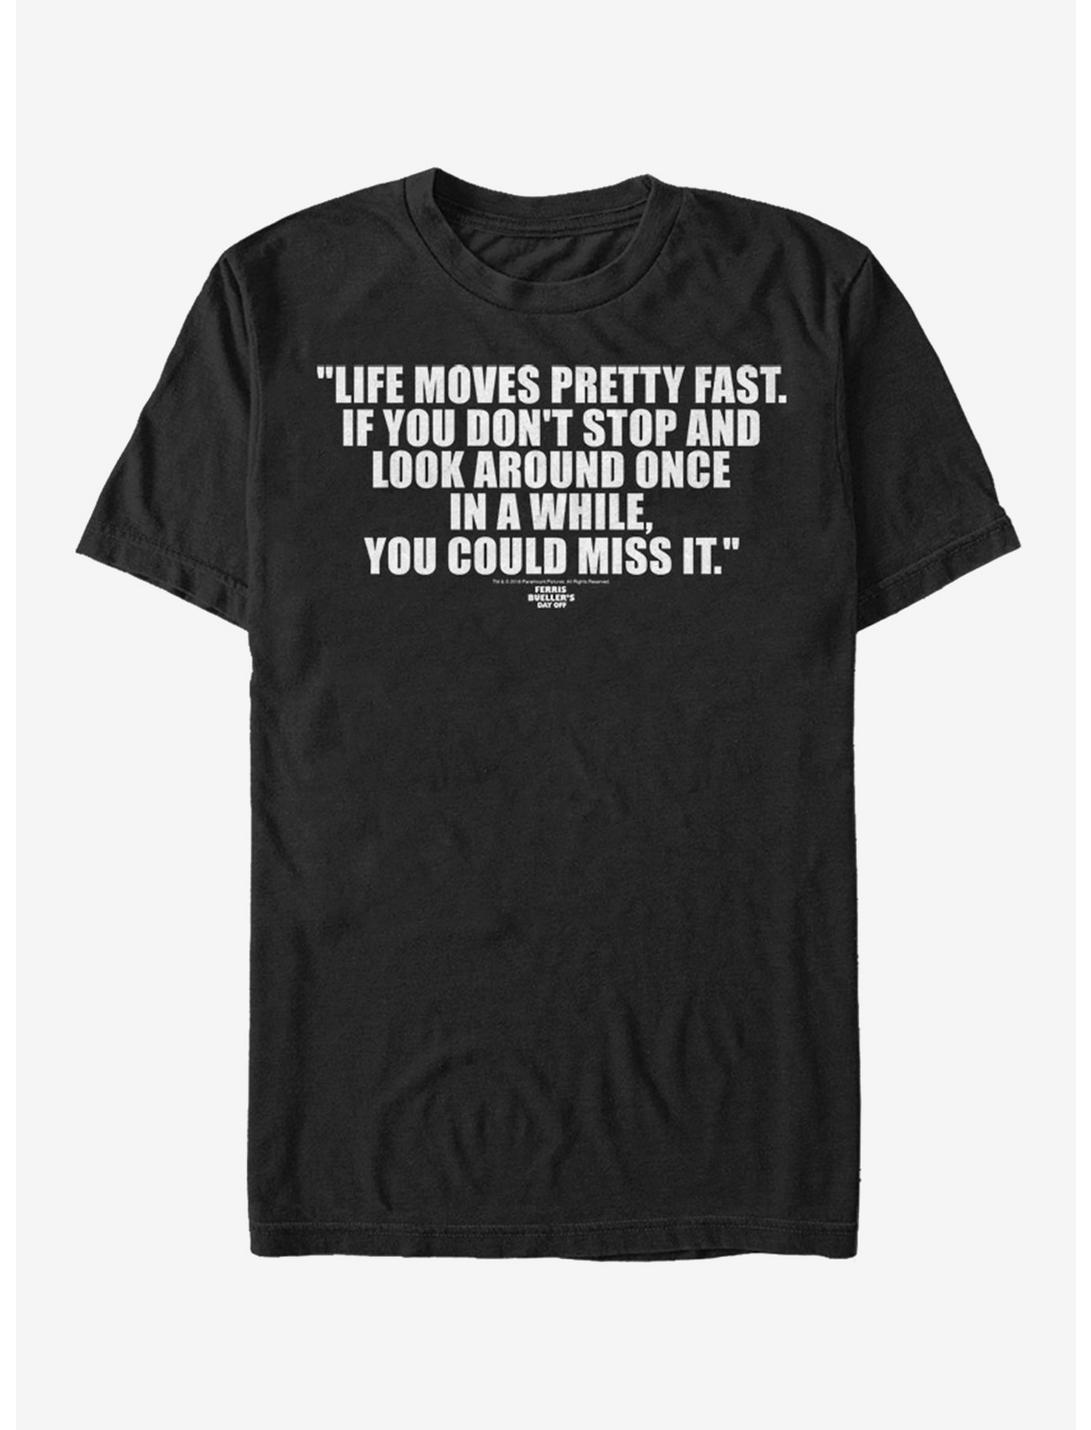 Ferris Bueller's Day Off Life Moves Pretty Fast T-Shirt, BLACK, hi-res